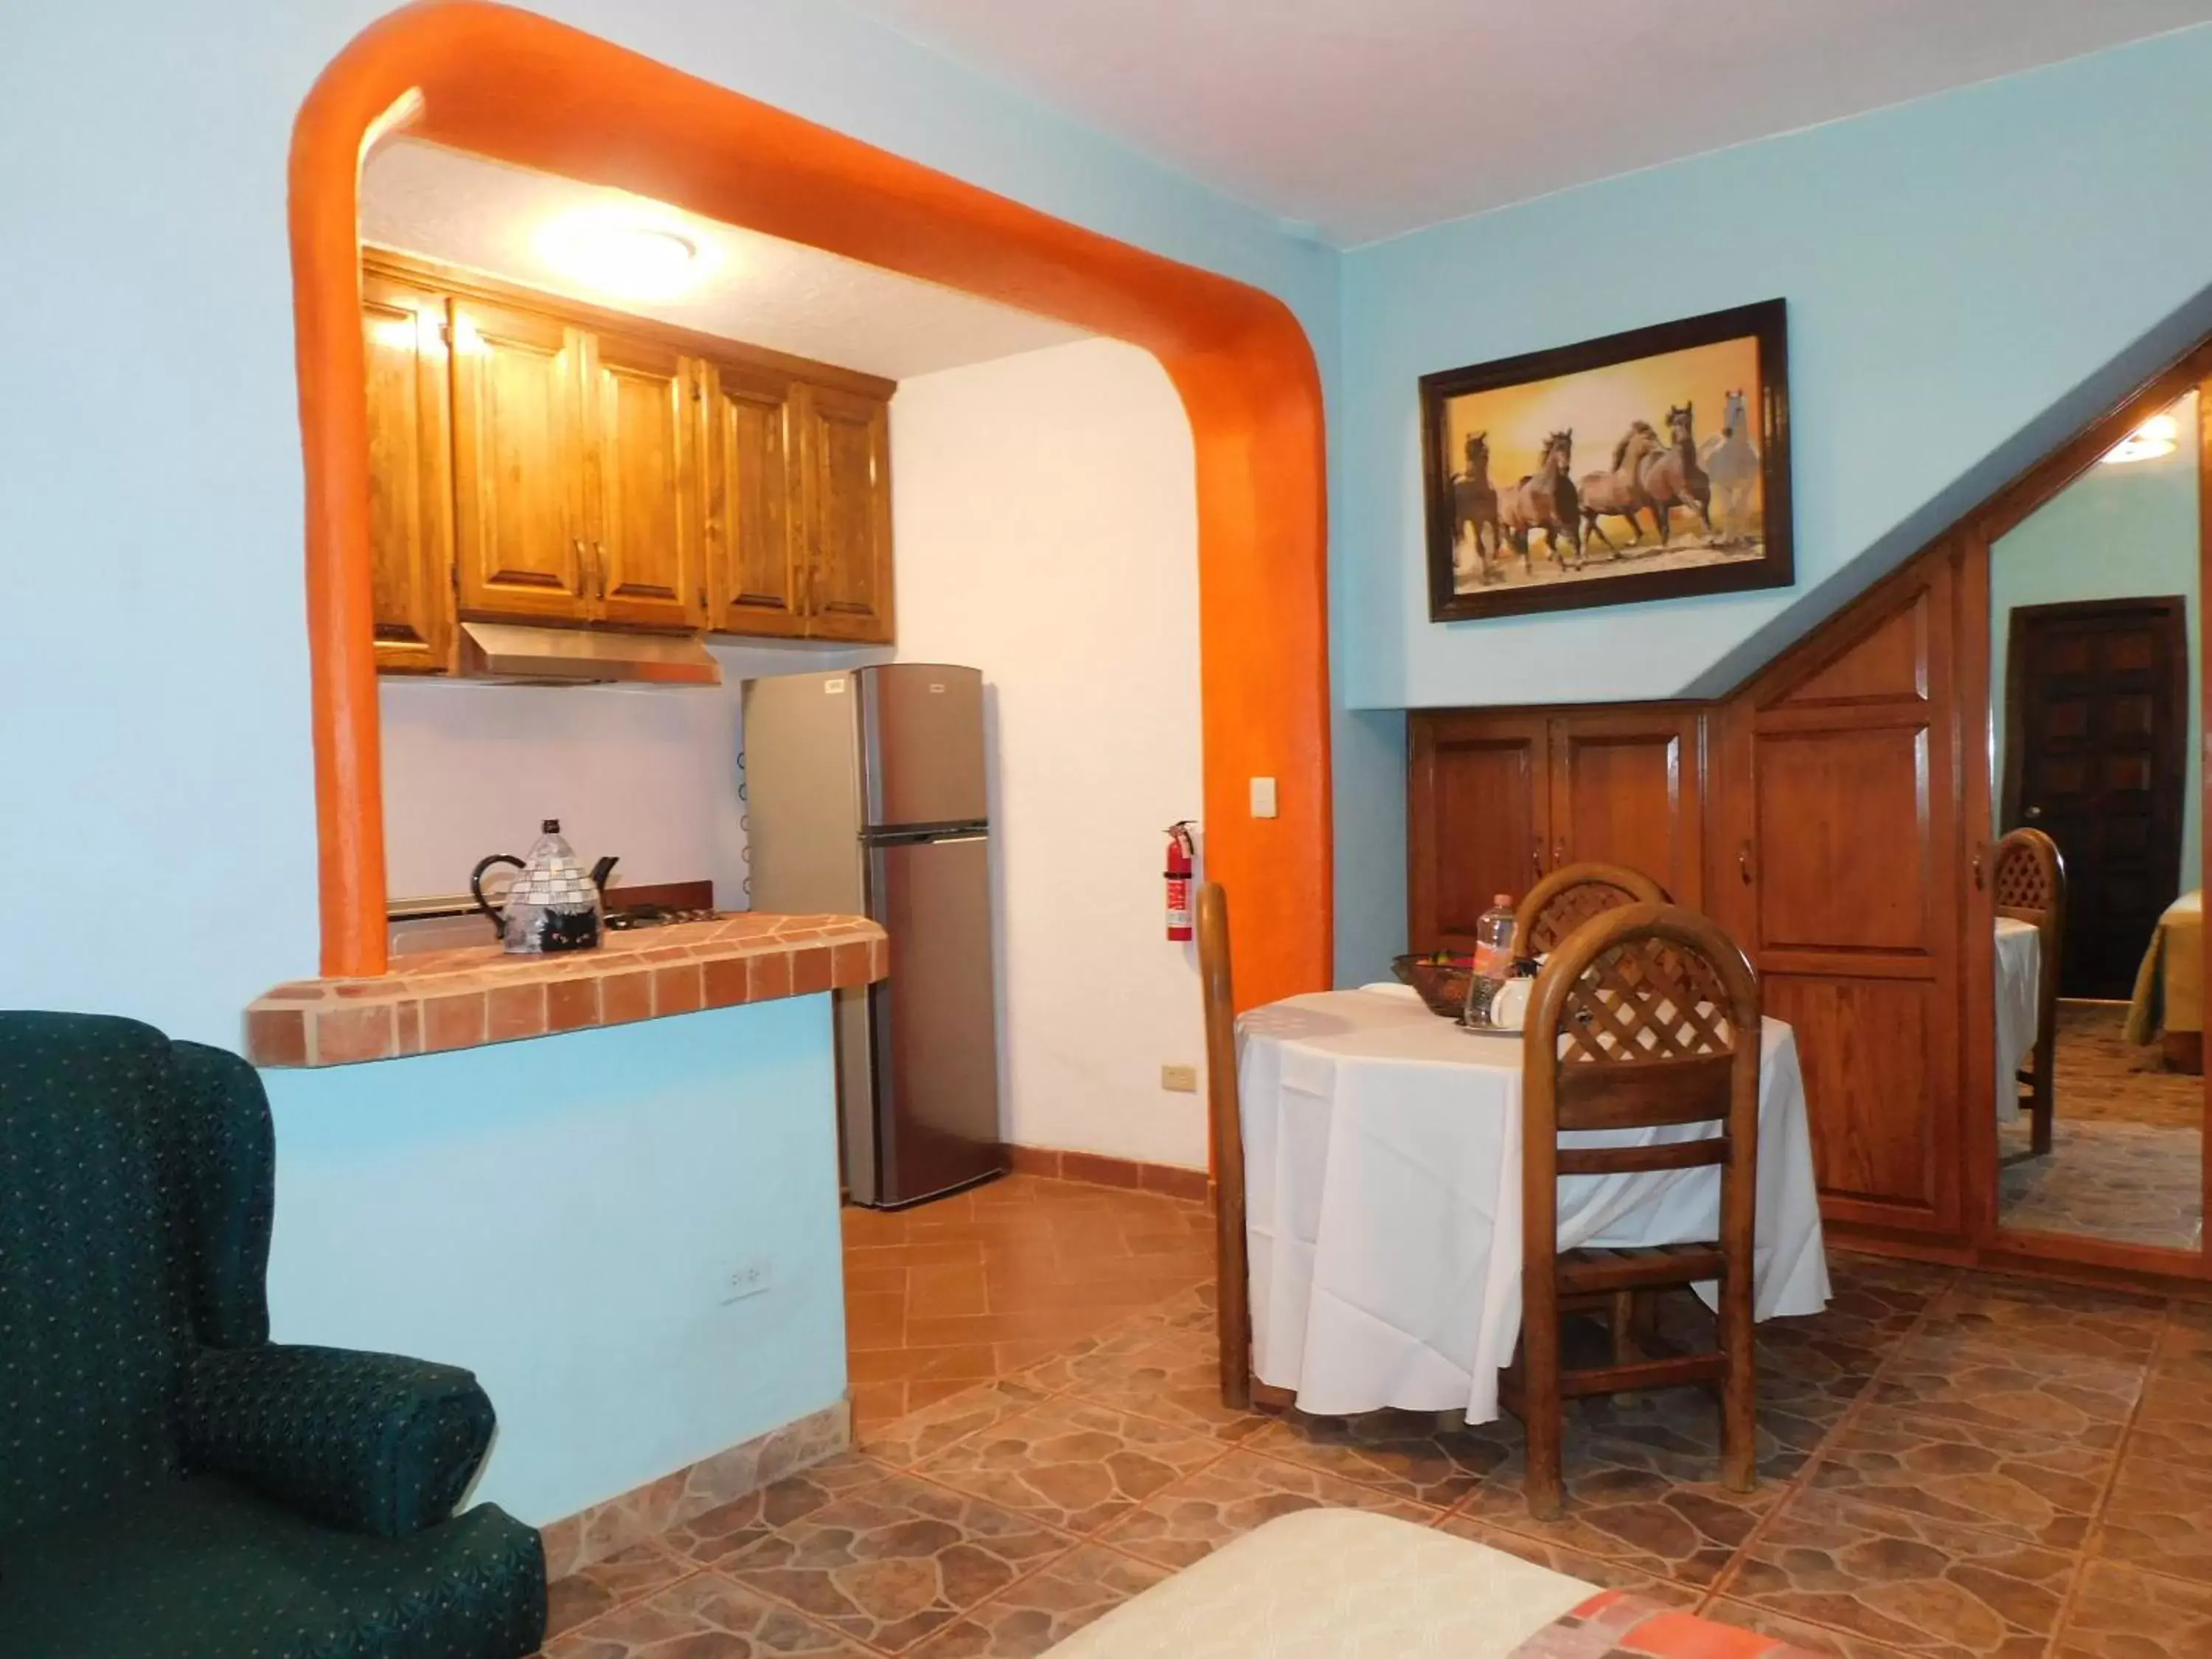 Kitchen/Kitchenette in Vista Del Sol Apartments